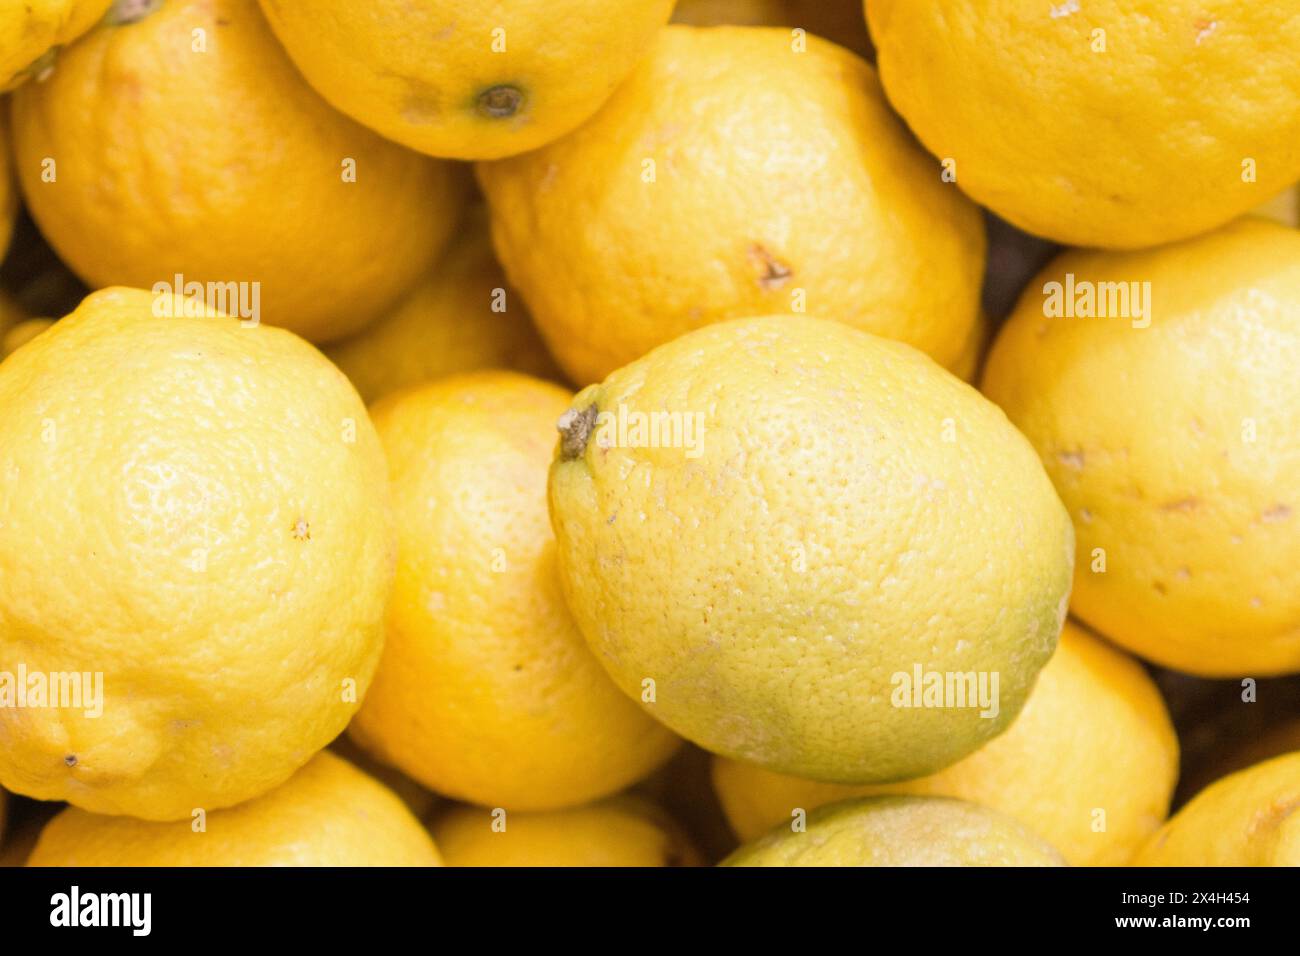 Lemons on the market. Juicy lemons background. Yellow fruits. Heap of ripe lemons. Yellow color background. Citrus harvest. Healthy eating. Stock Photo